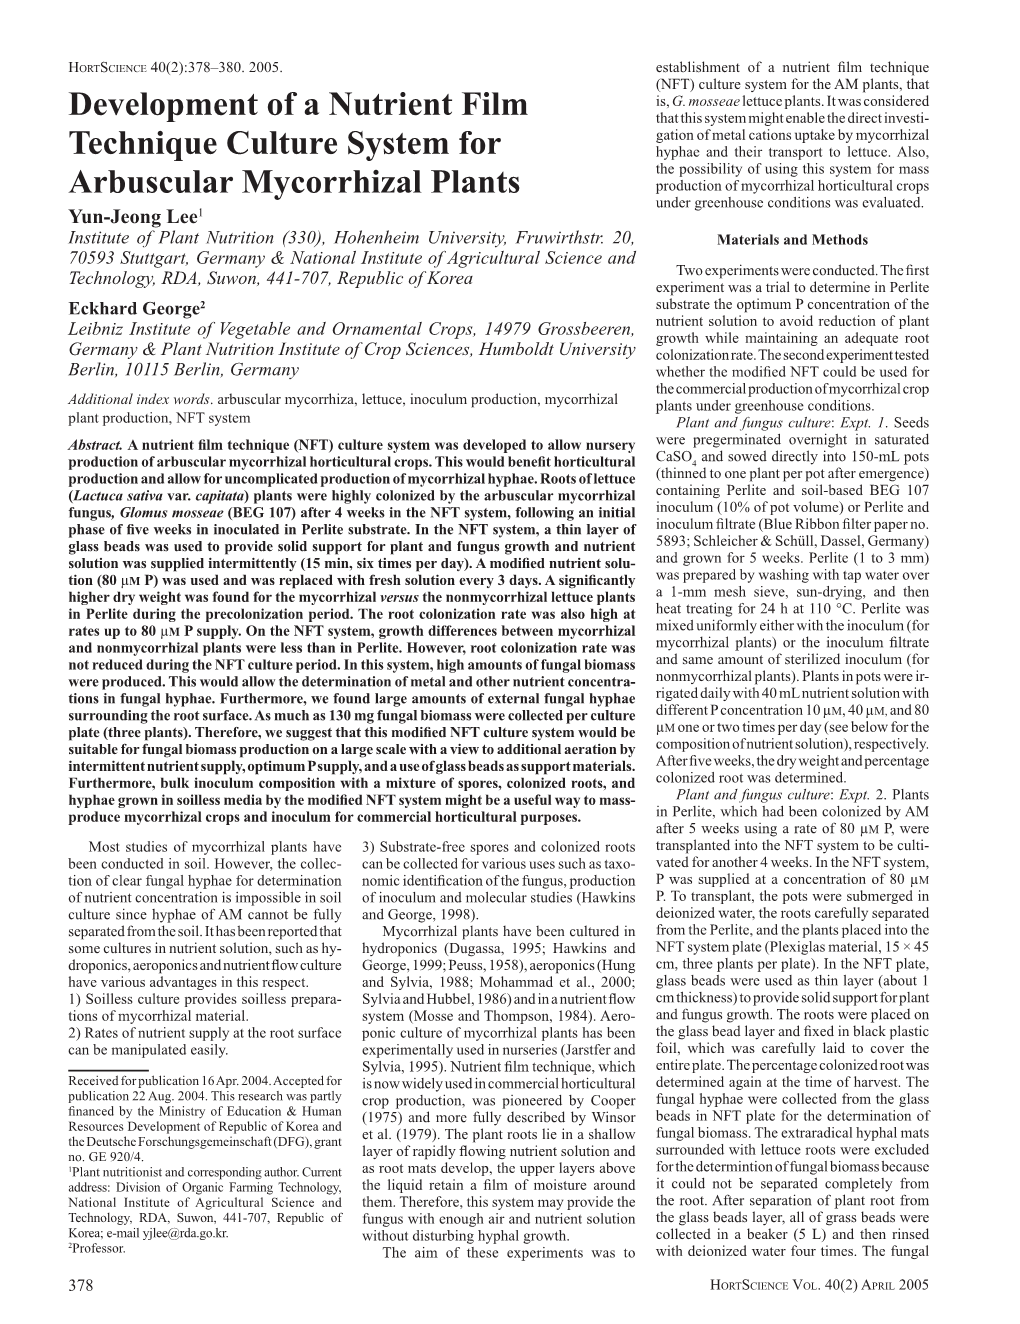 Development of a Nutrient Film Technique Culture System for Arbuscular Mycorrhizal Plants